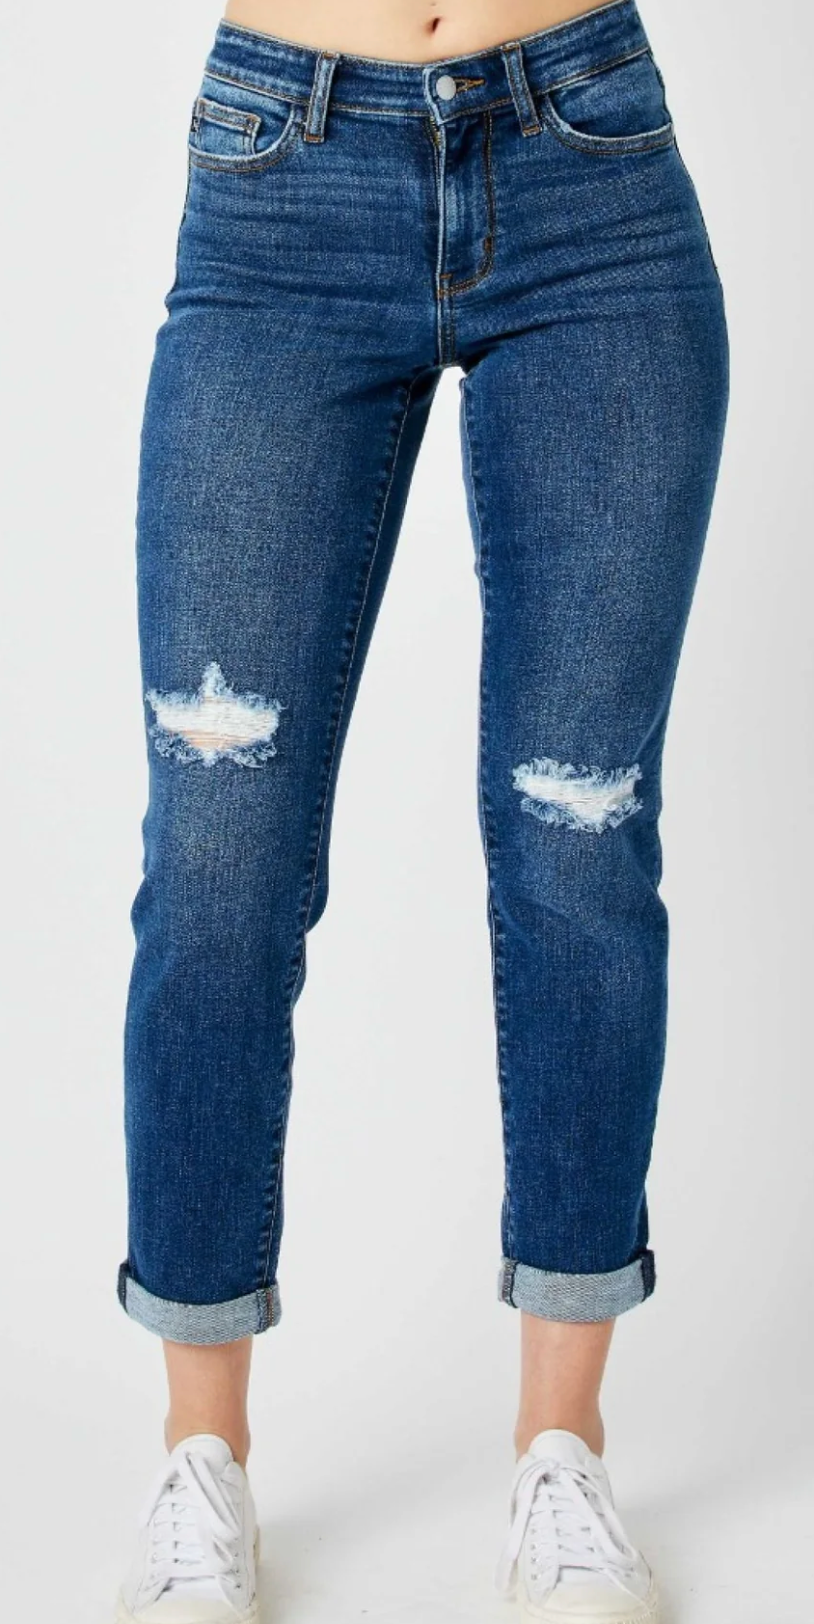 Judy Blue Midrise Slim Jeans (cuffed or uncuffed)